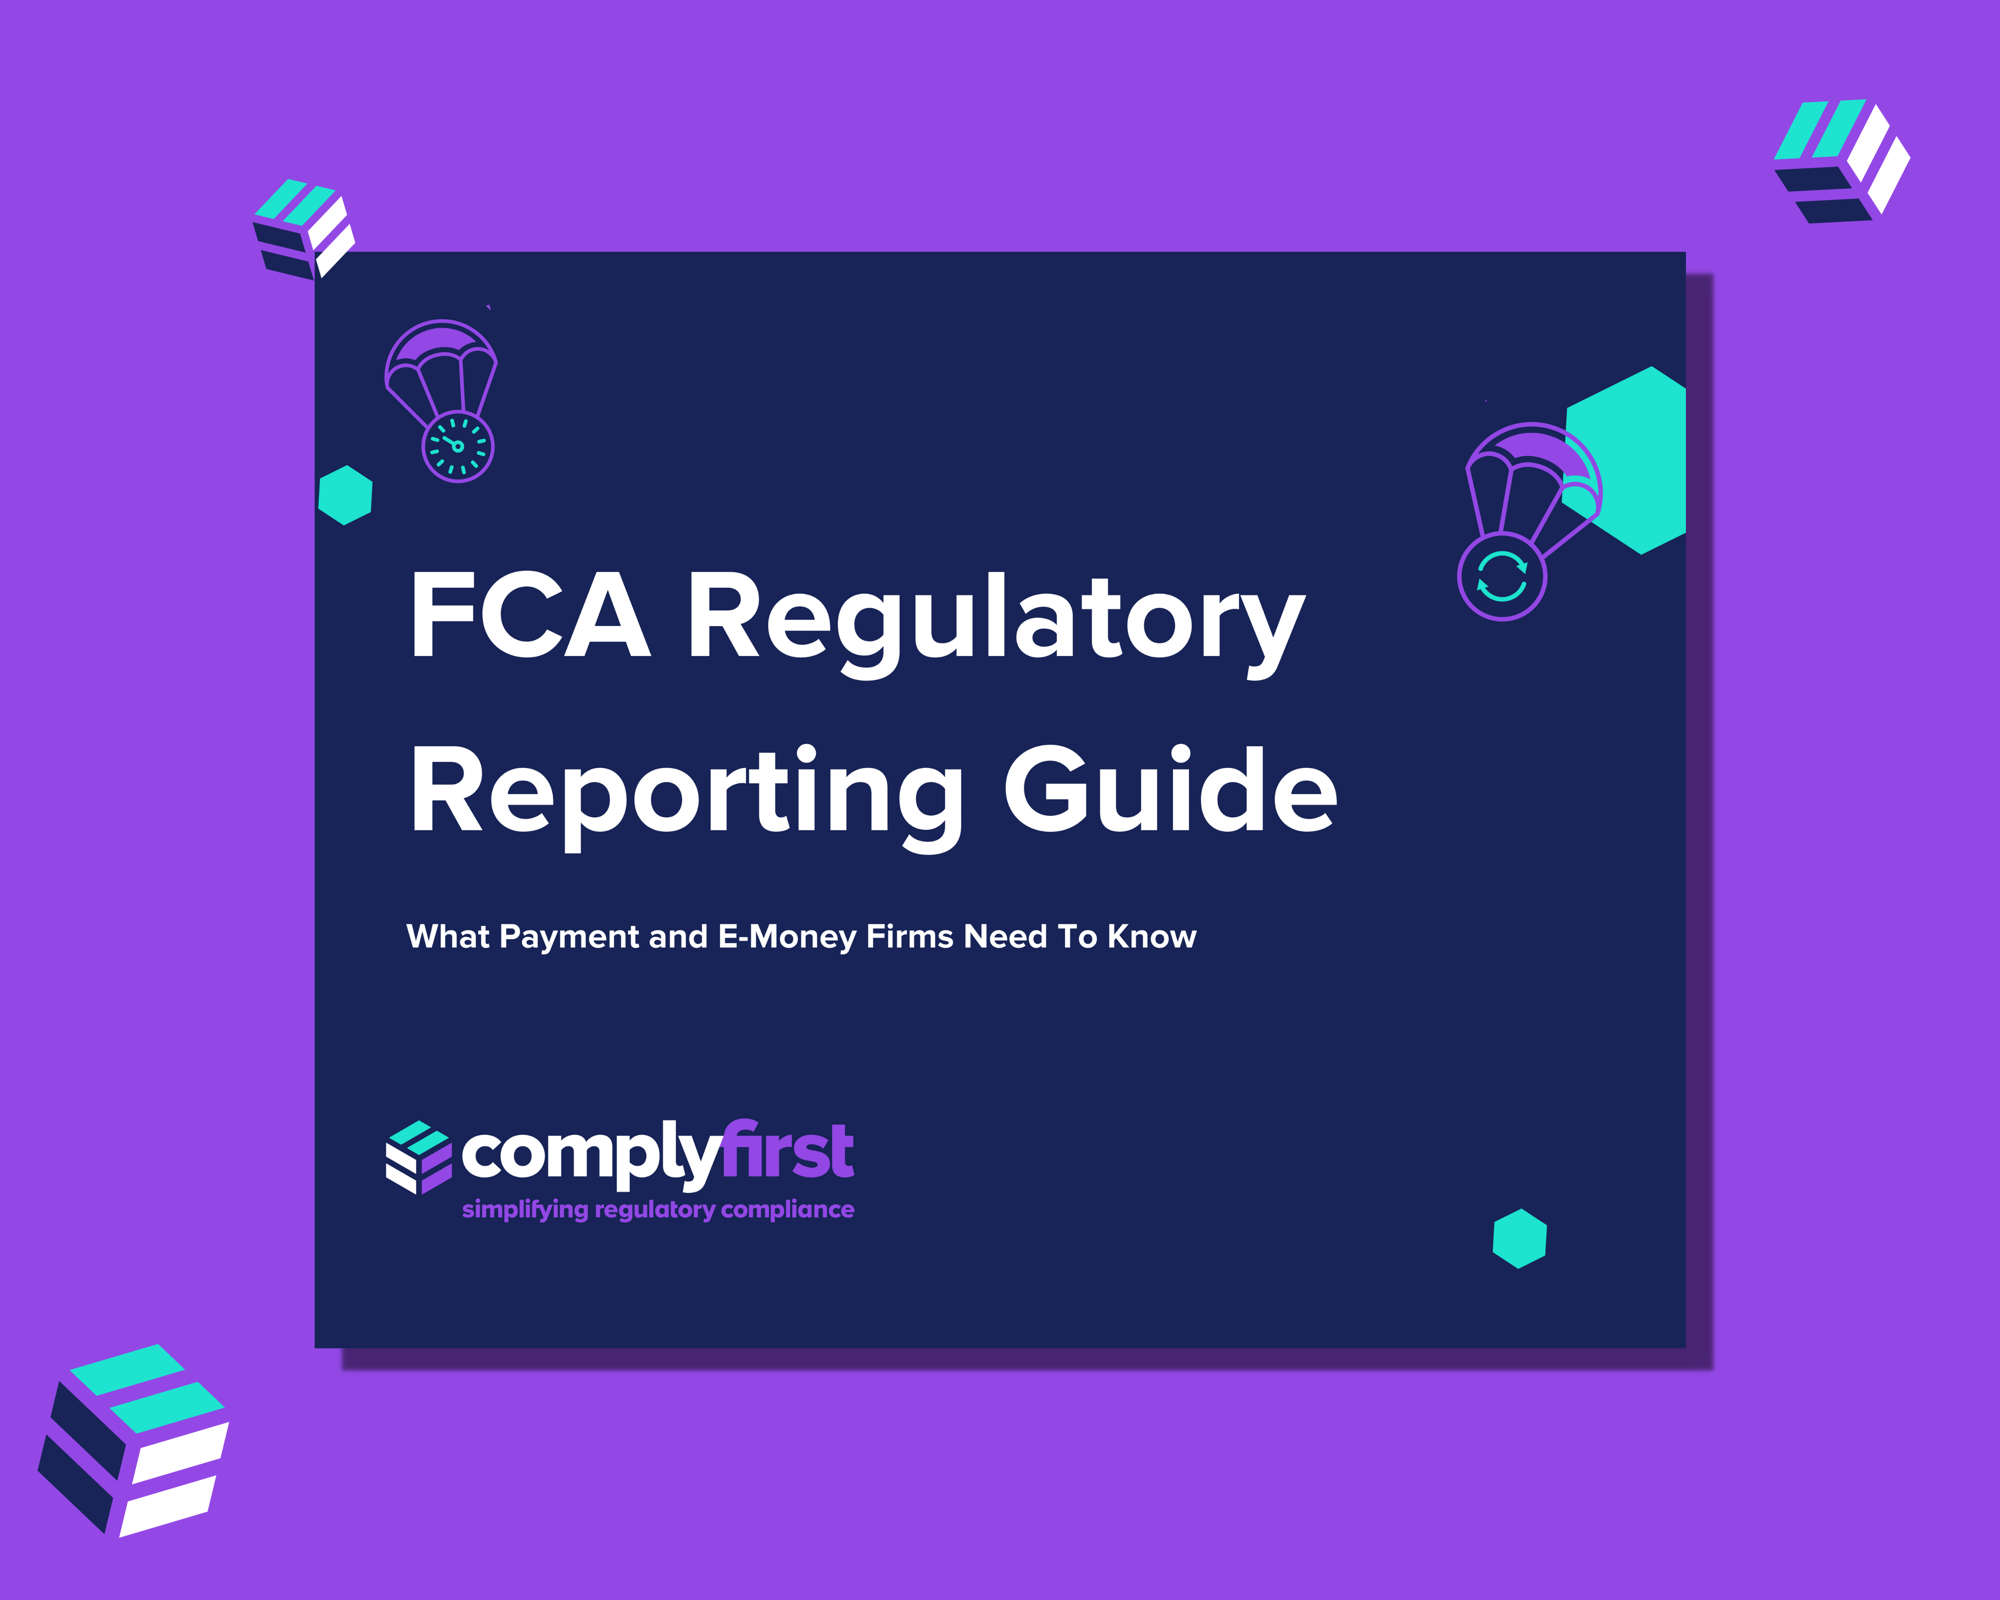 FCA Regulatory Reporting Guide Complyfirst (1)